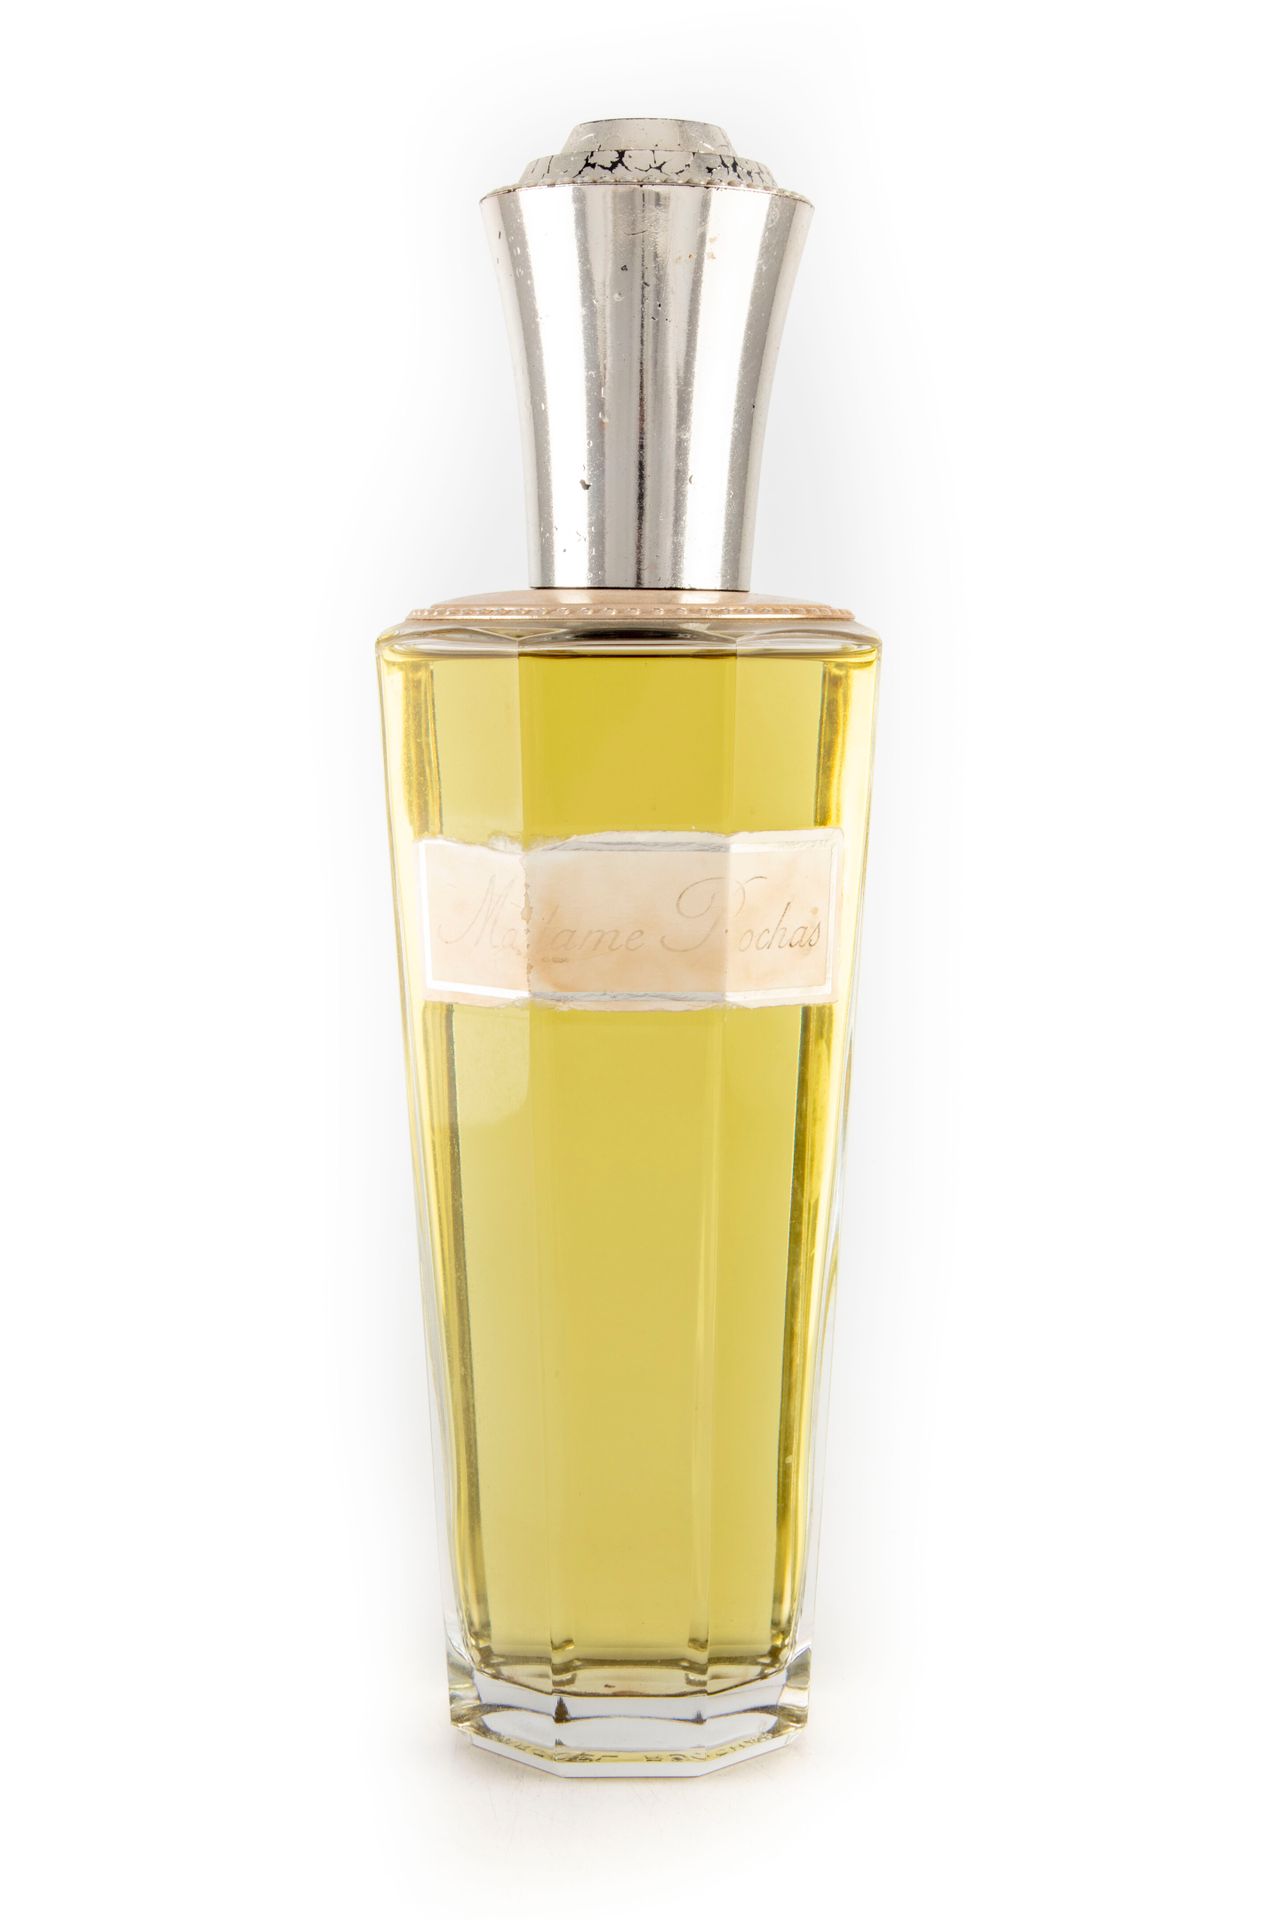 Null ROCHAS

玻璃香水瓶 "Madame Rochas"，假的

H.27厘米